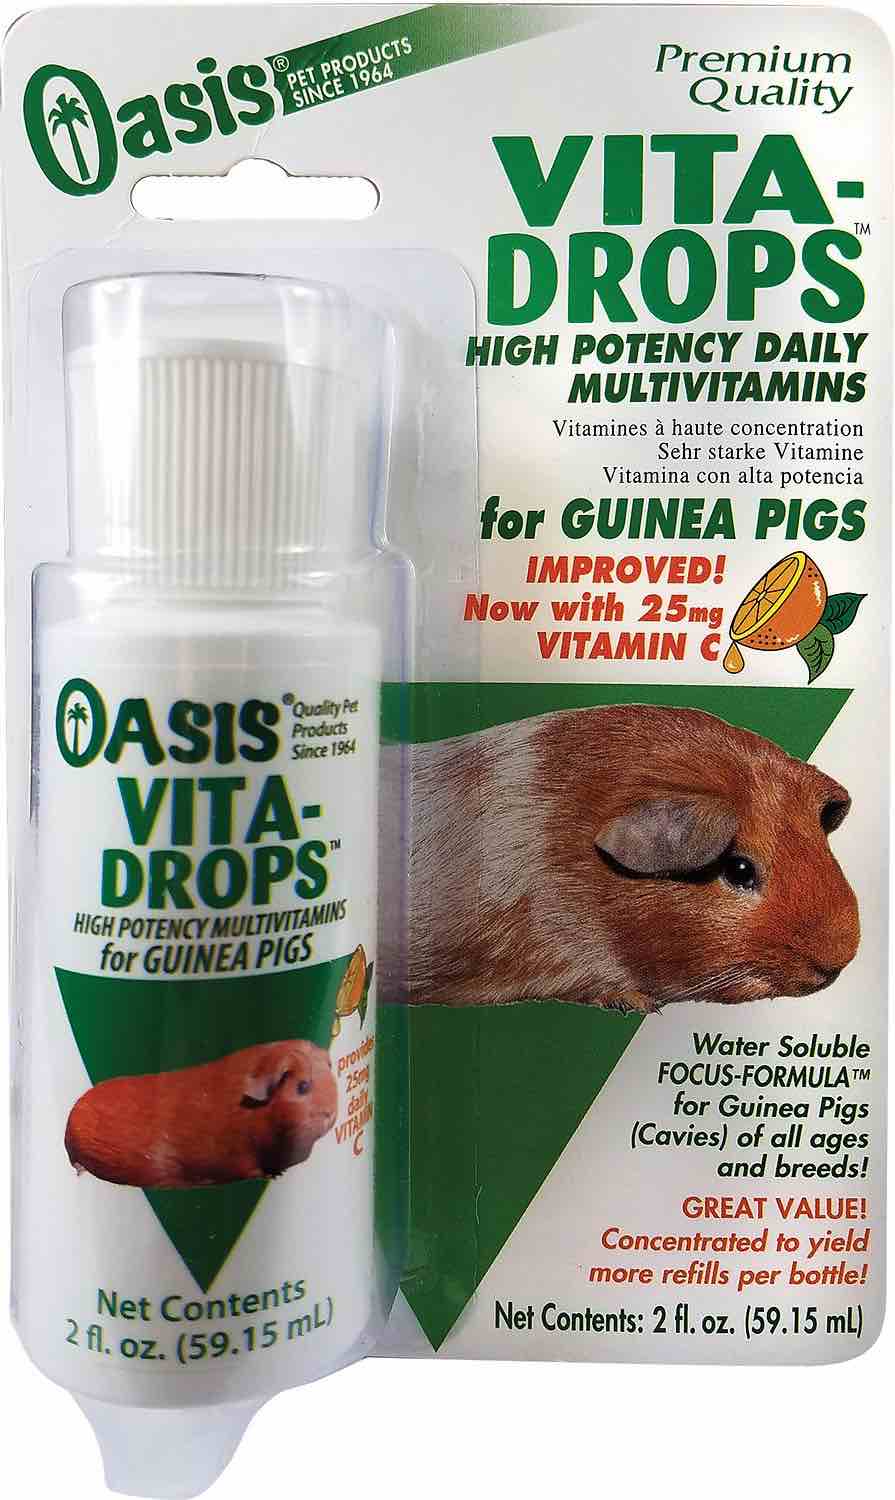 Oasis Vita-Drops for Guinea Pigs